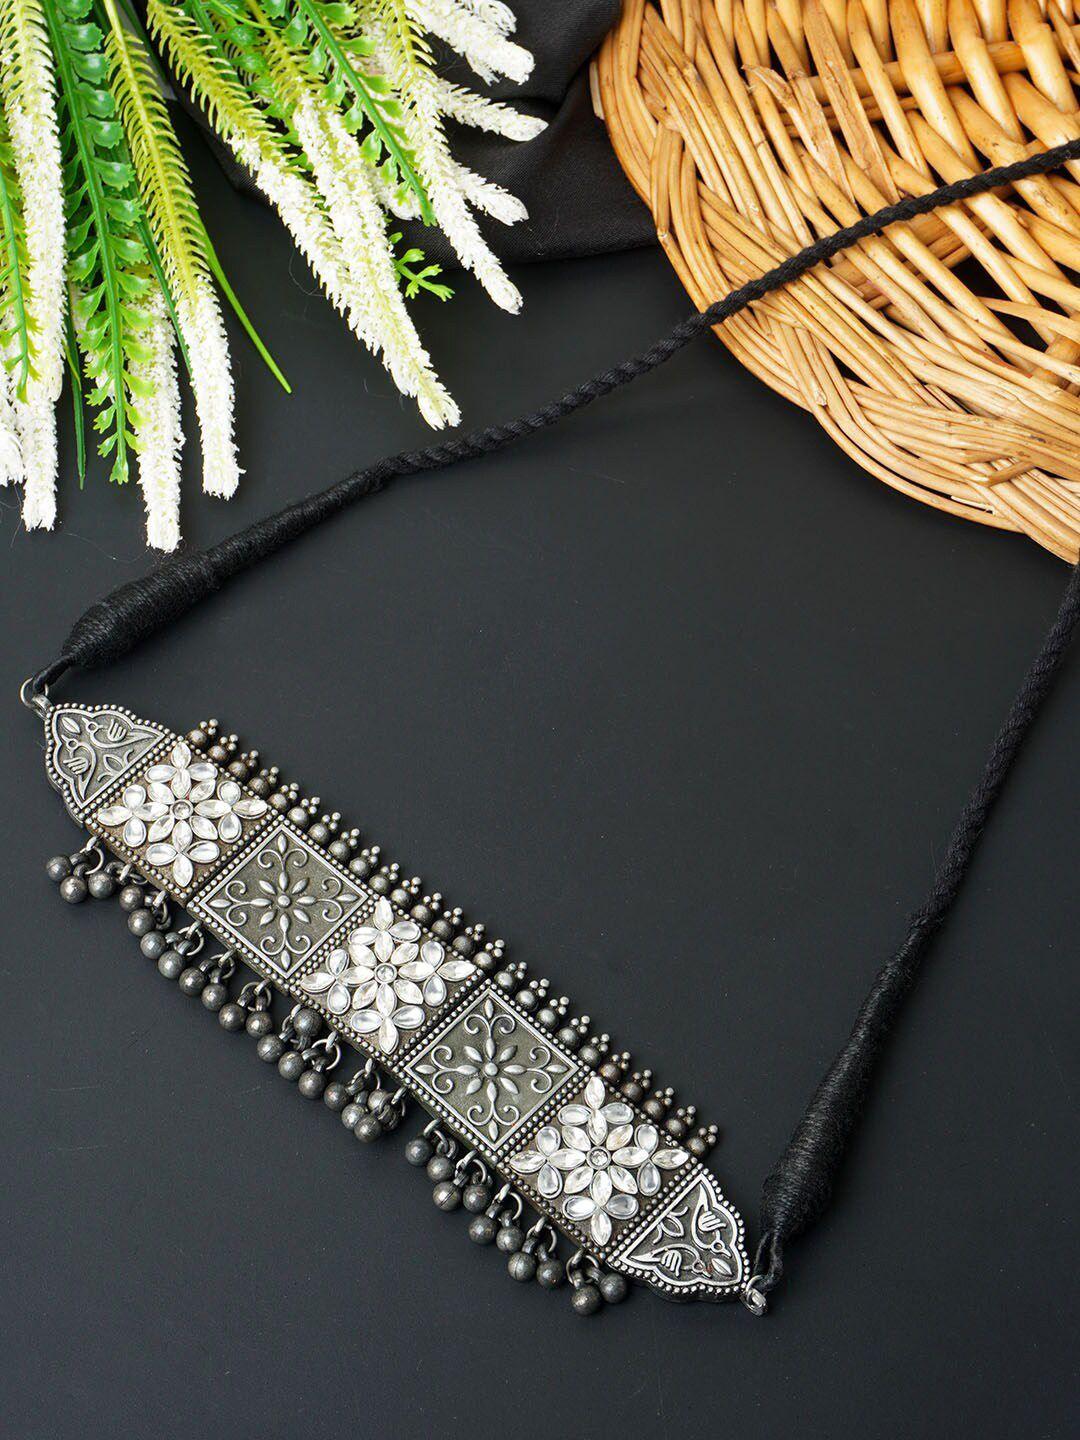 urmika silver-plated & white oxidised choker necklace